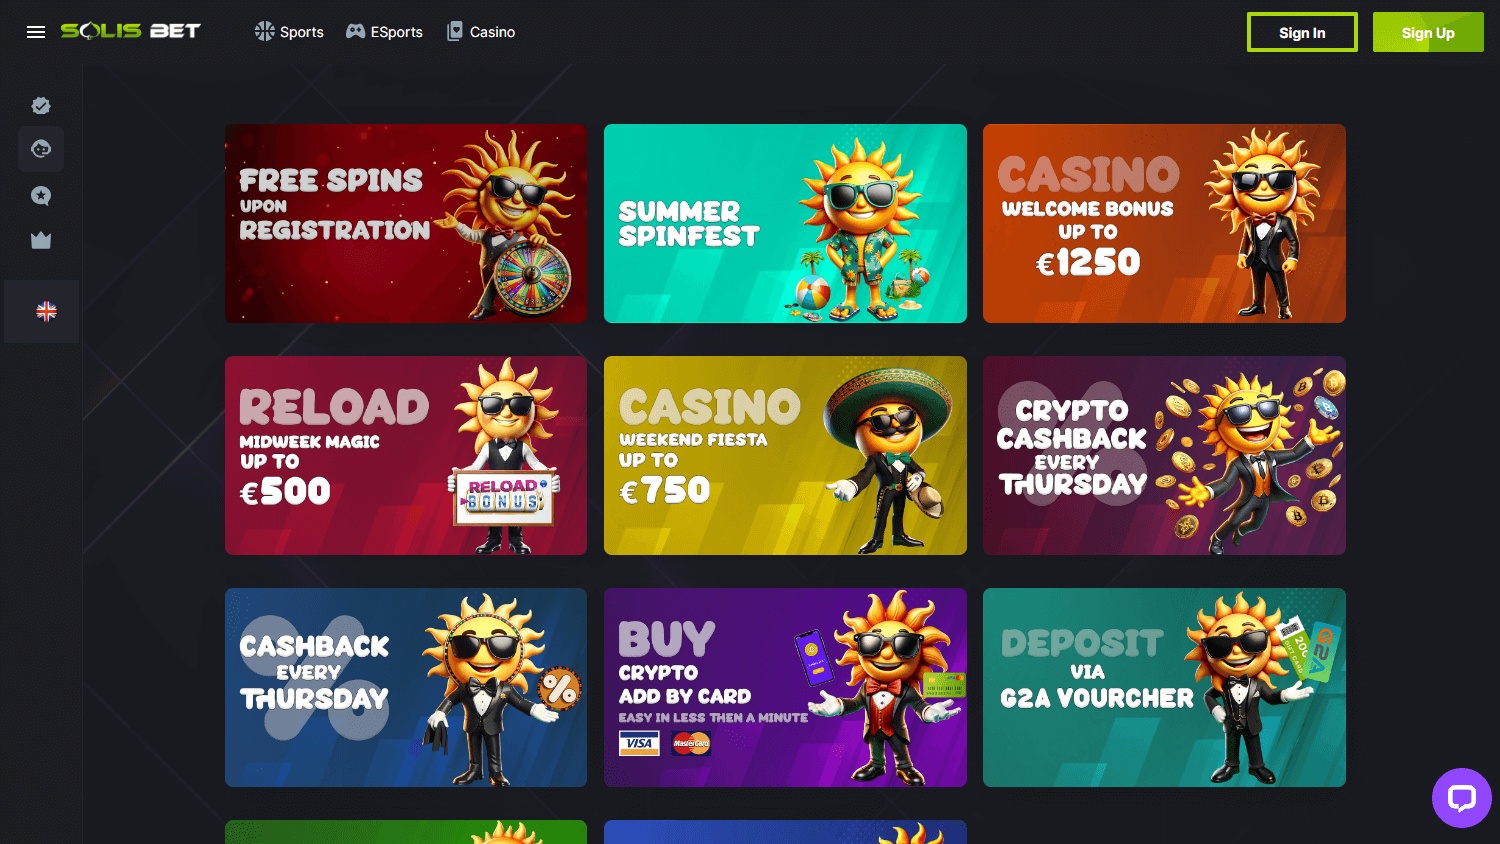 solisbet_casino_promotion_desktop